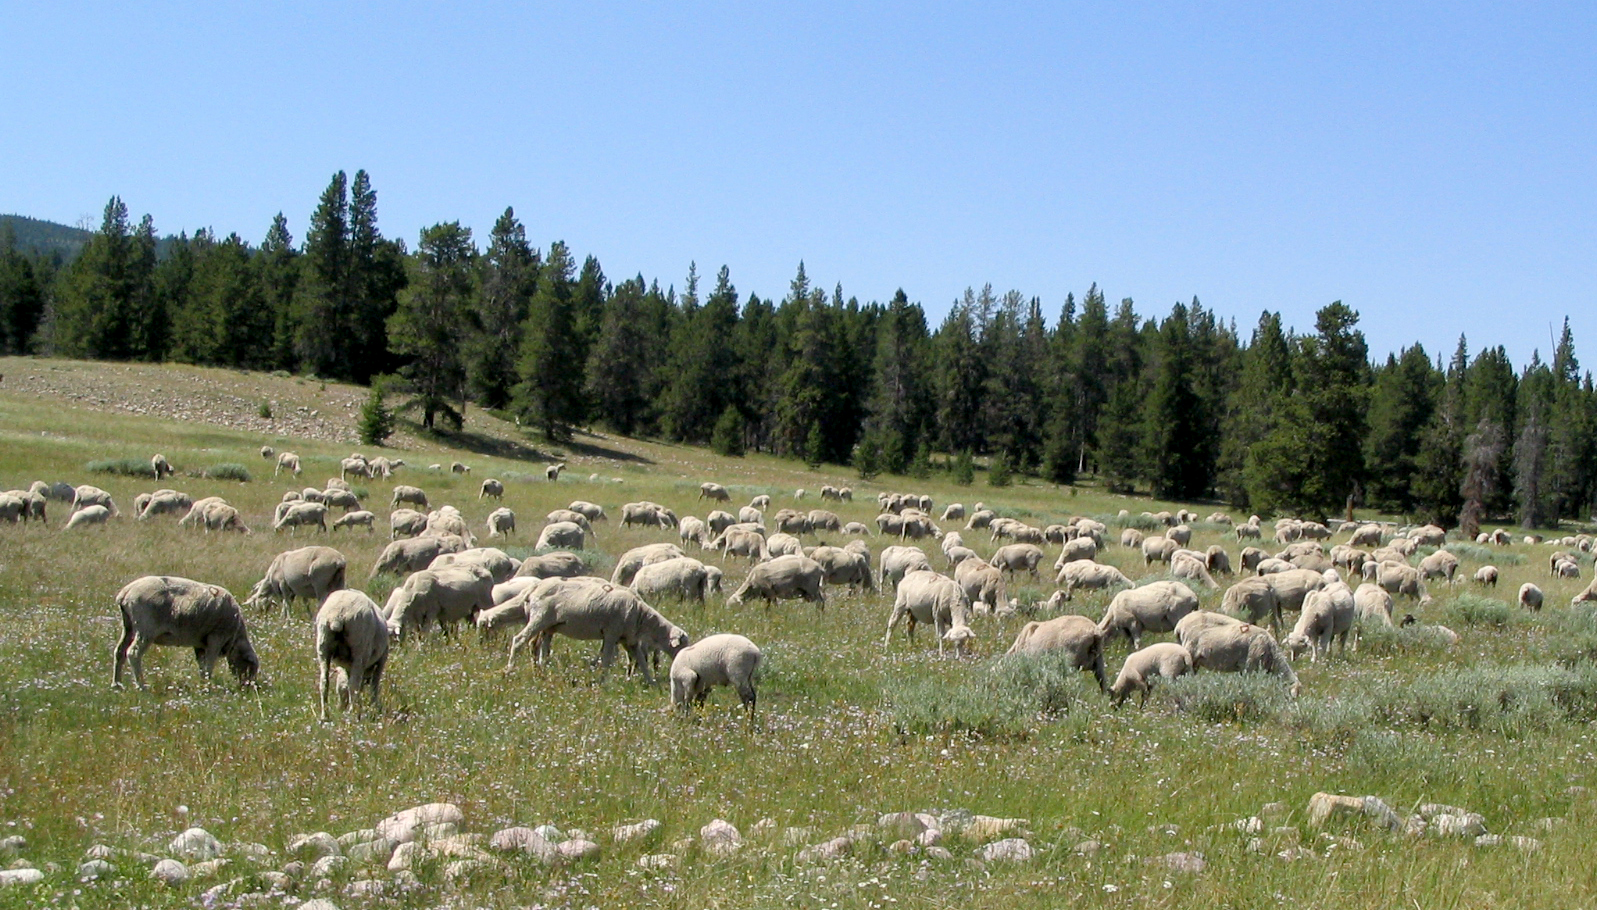 Sheep grazing in the High Uintas Wilderness, Utah